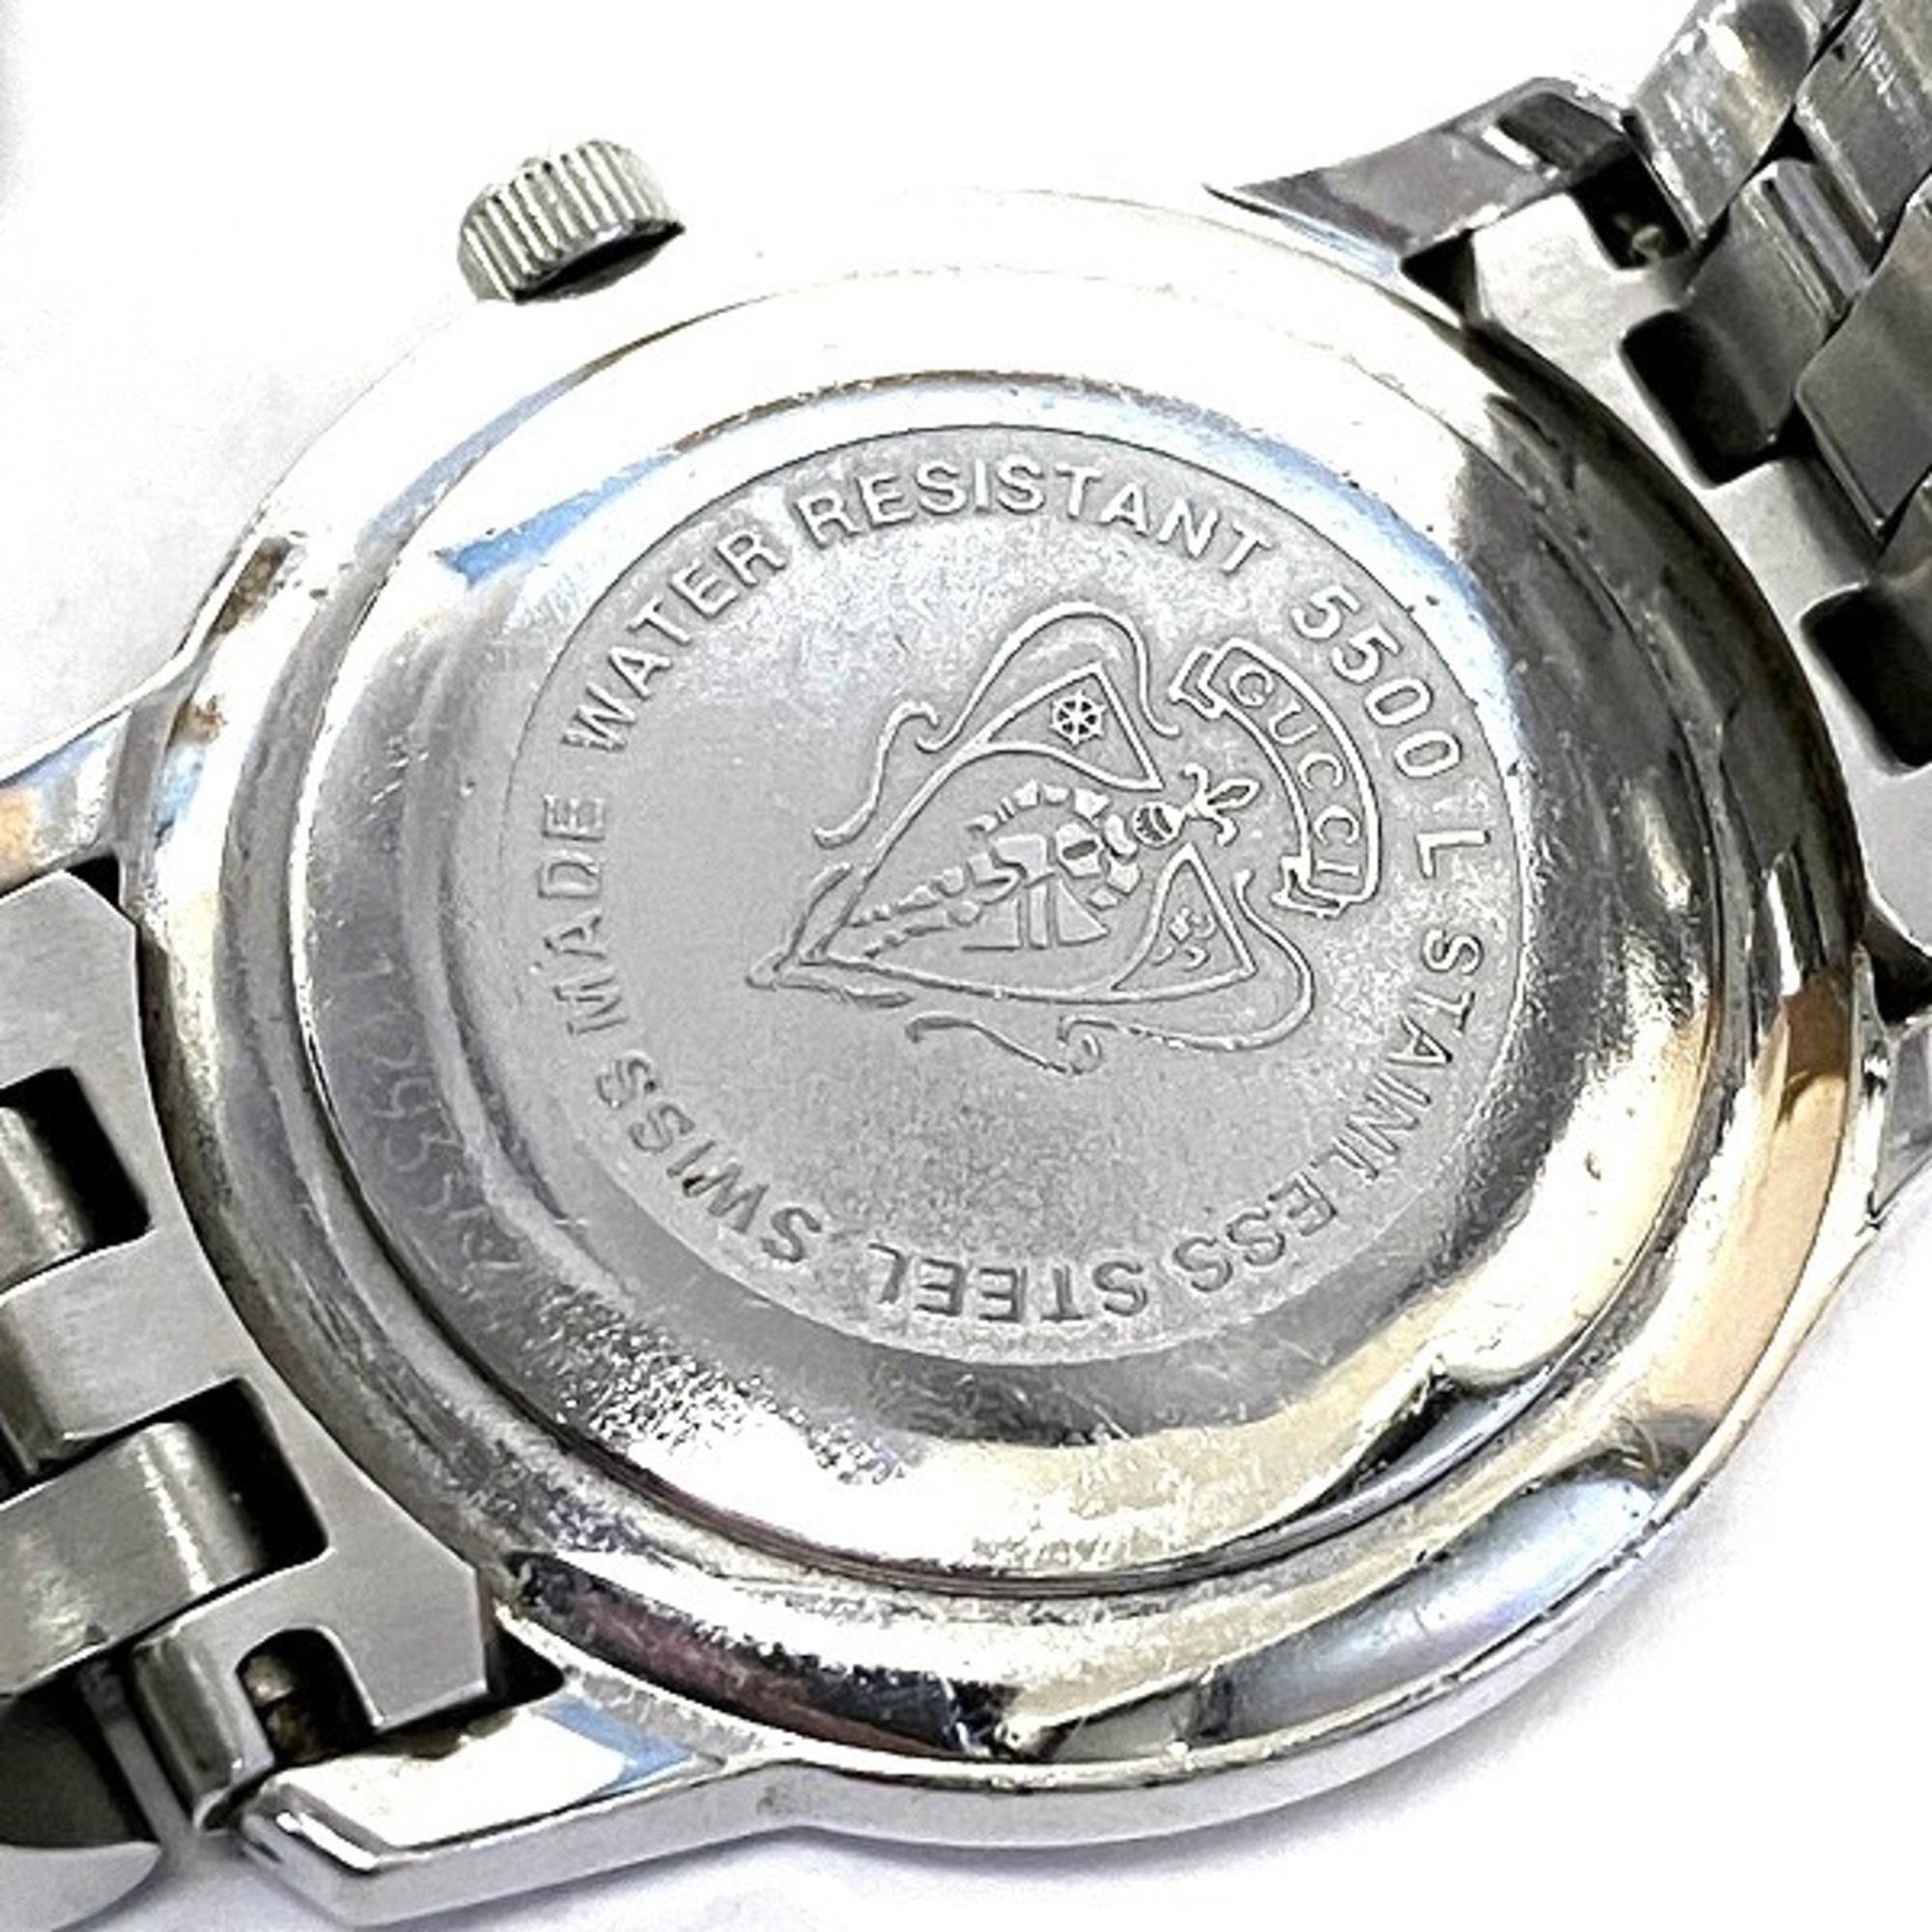 GUCCI 5500L Quartz 11P Diamond Watch Ladies